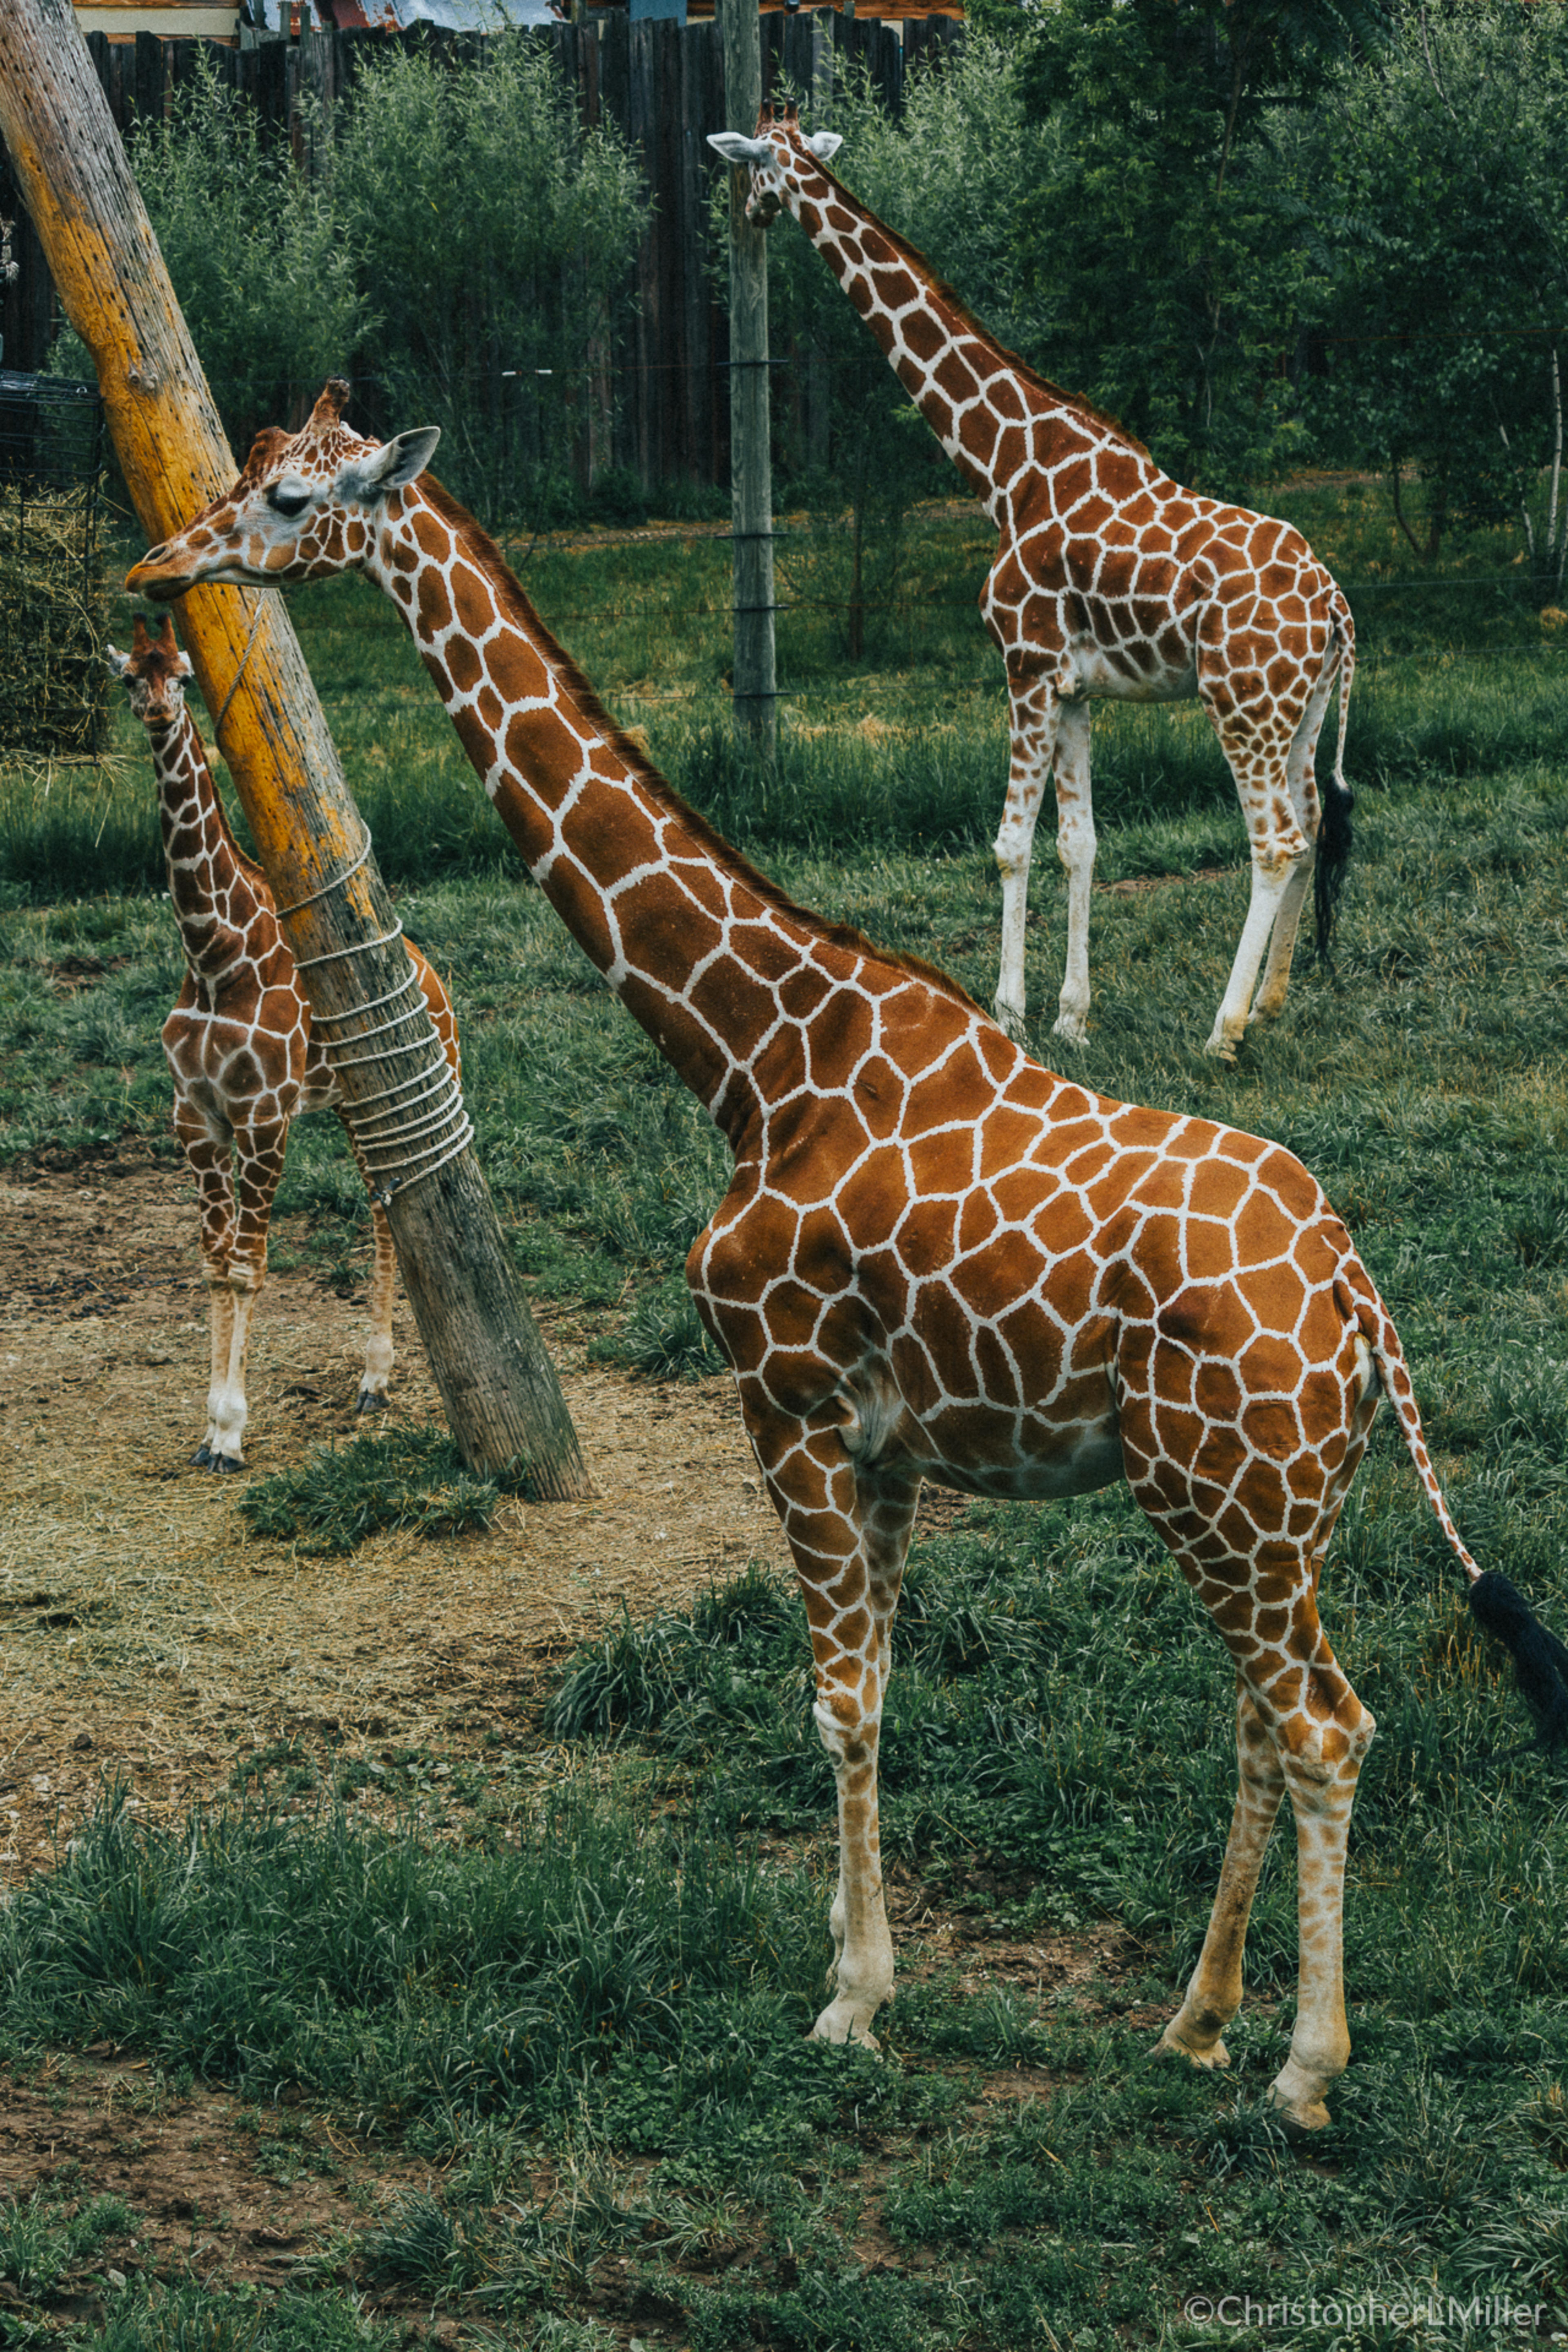 Tall horses, i mean giraffes